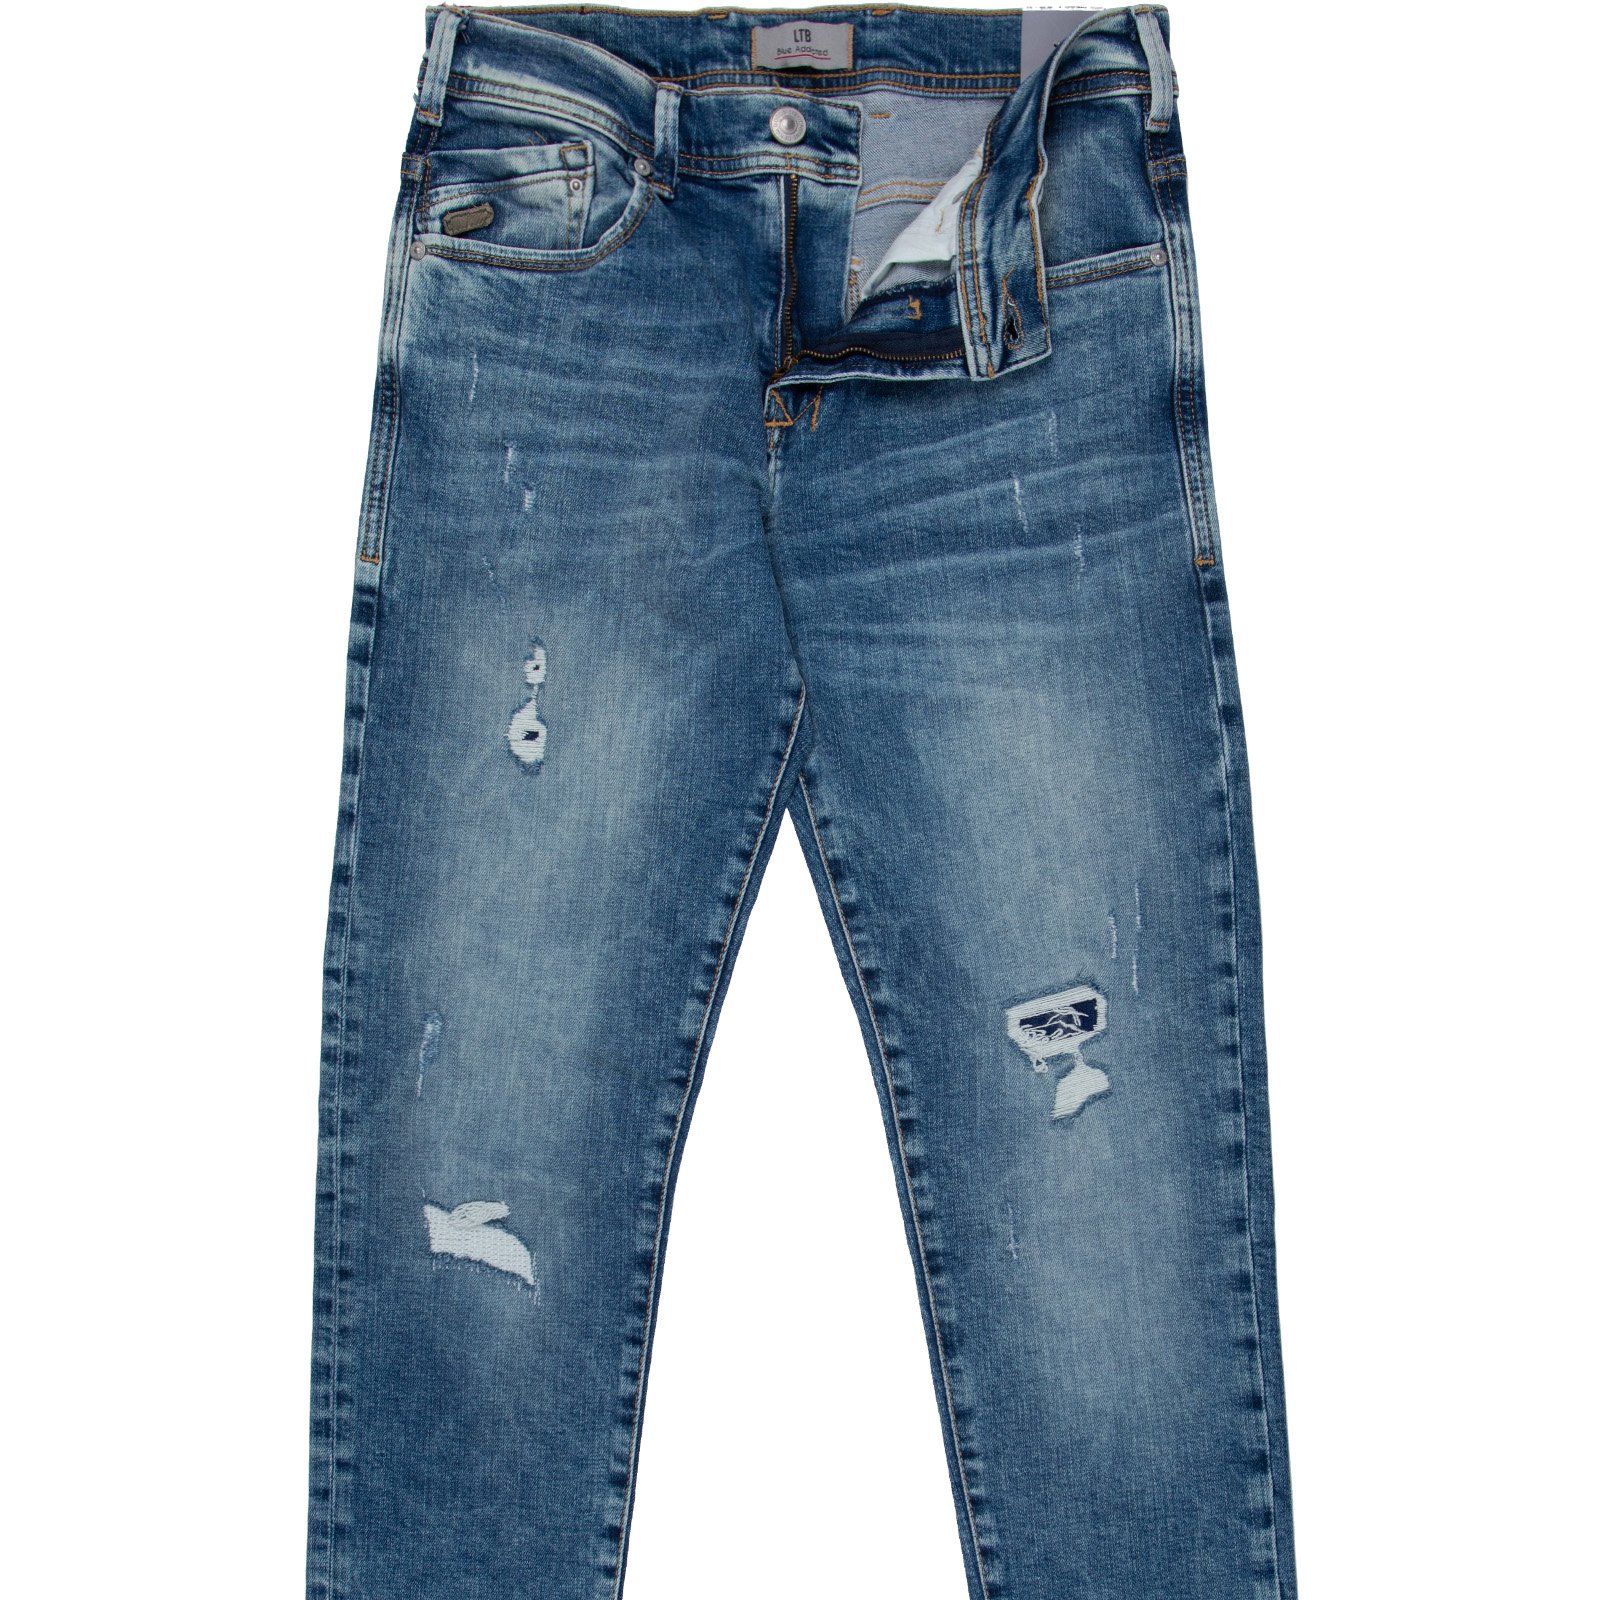 New Diego-X Vader Stretch Denim Jeans - Jeans : Fifth Avenue Menswear ...